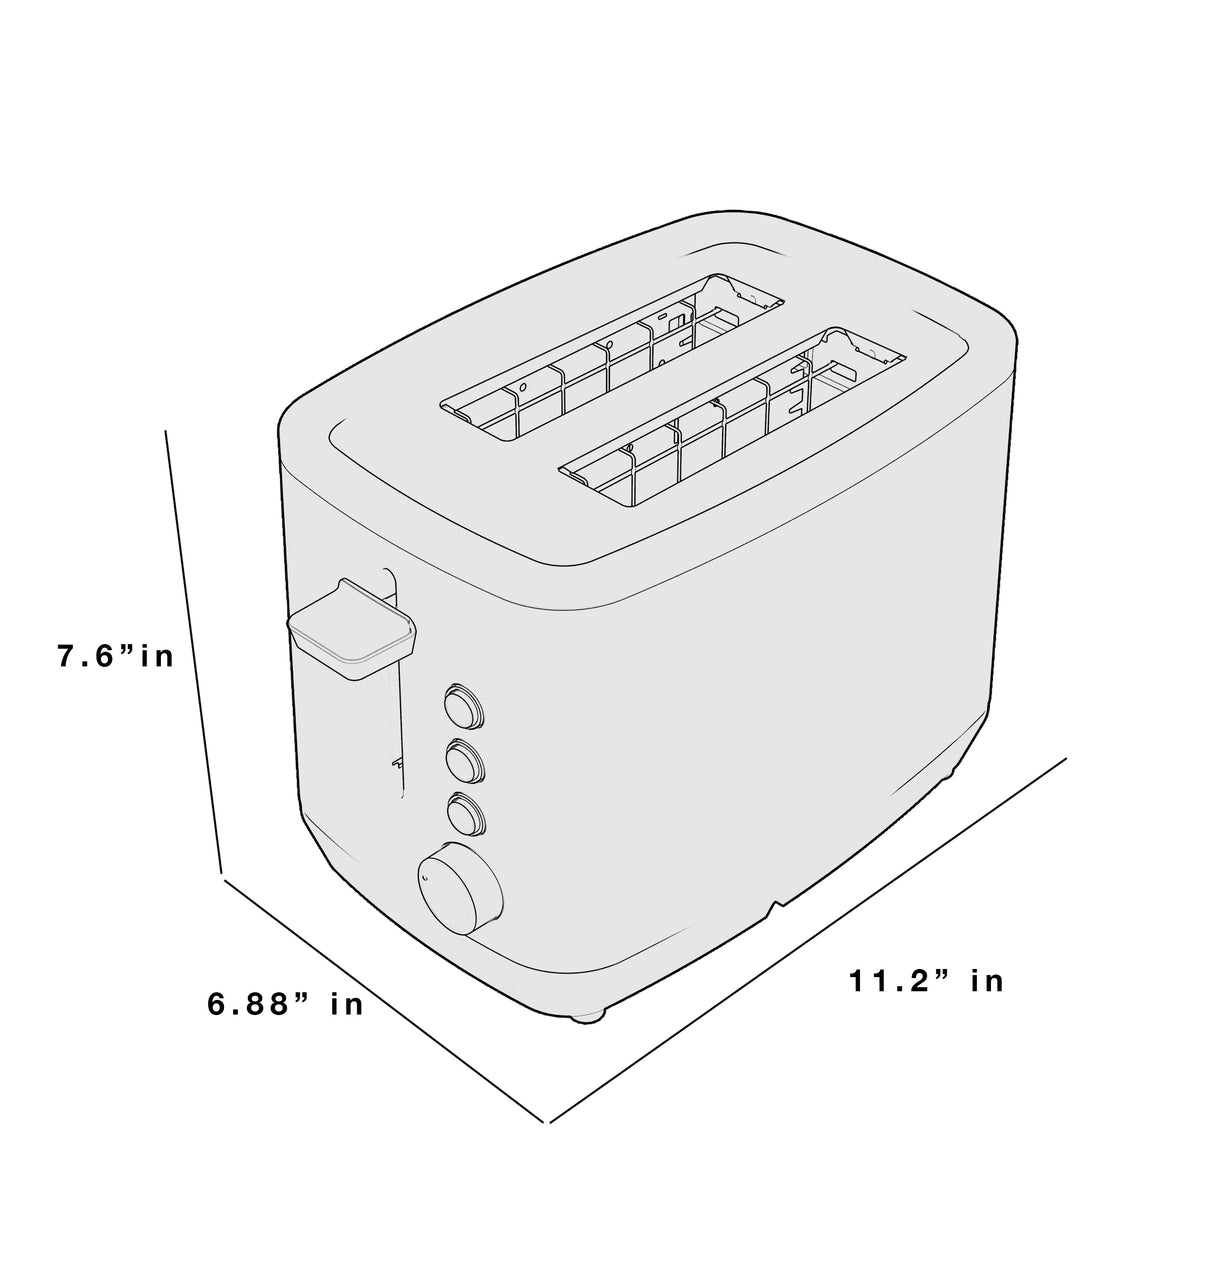 GE 2-Slice Toaster - (G9TMA2SSPSS)